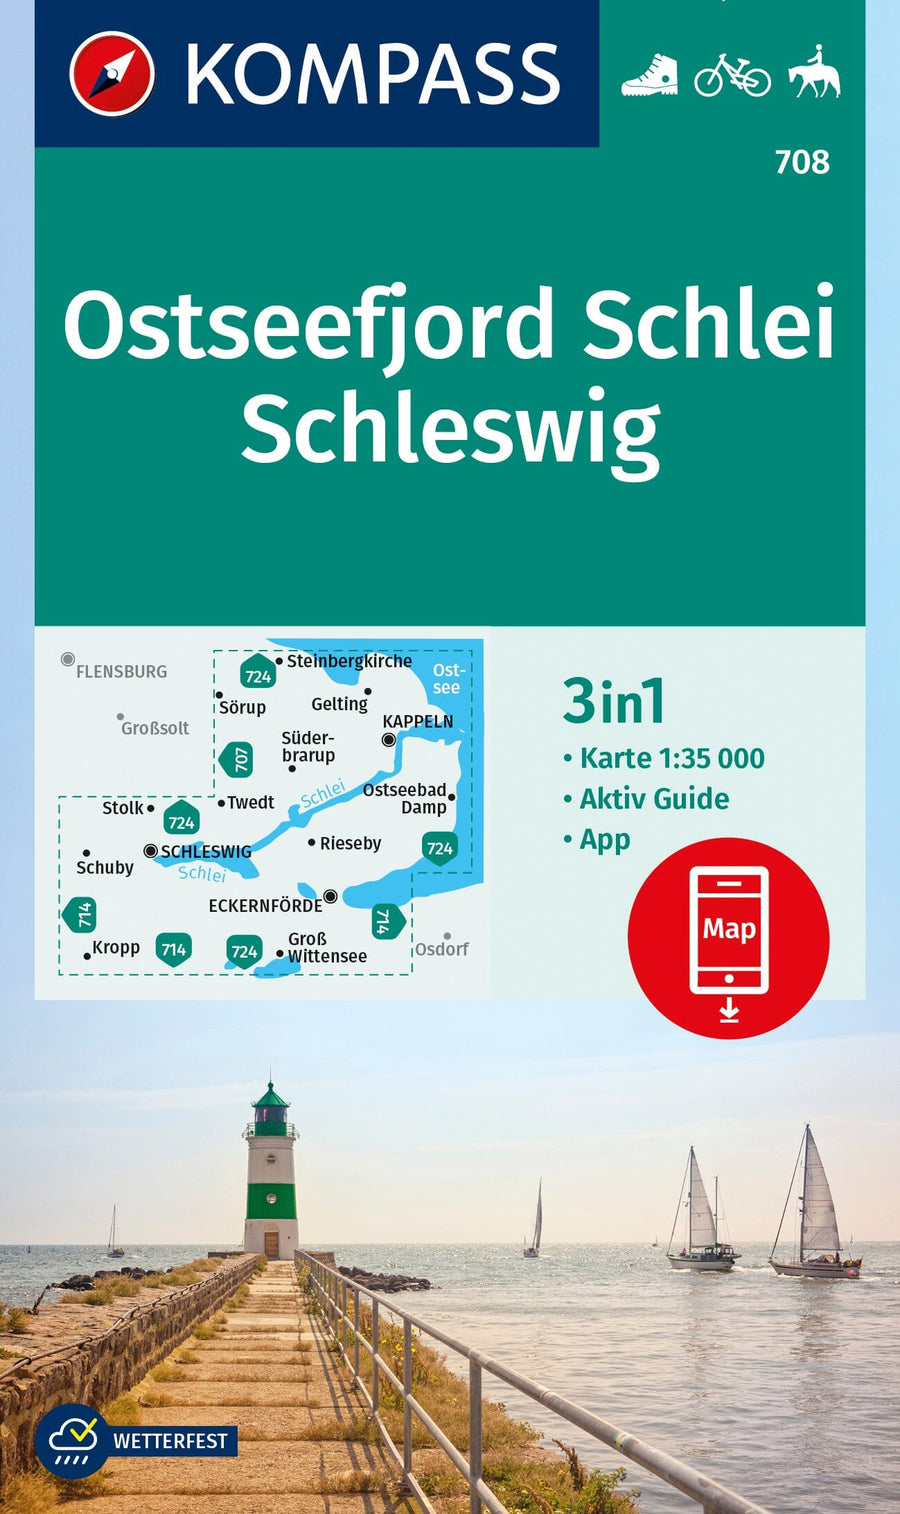 Carte de randonnée n° 708 - Ostseefjord Schlei, Schleswig (Allemagne) | Kompass carte pliée Kompass 